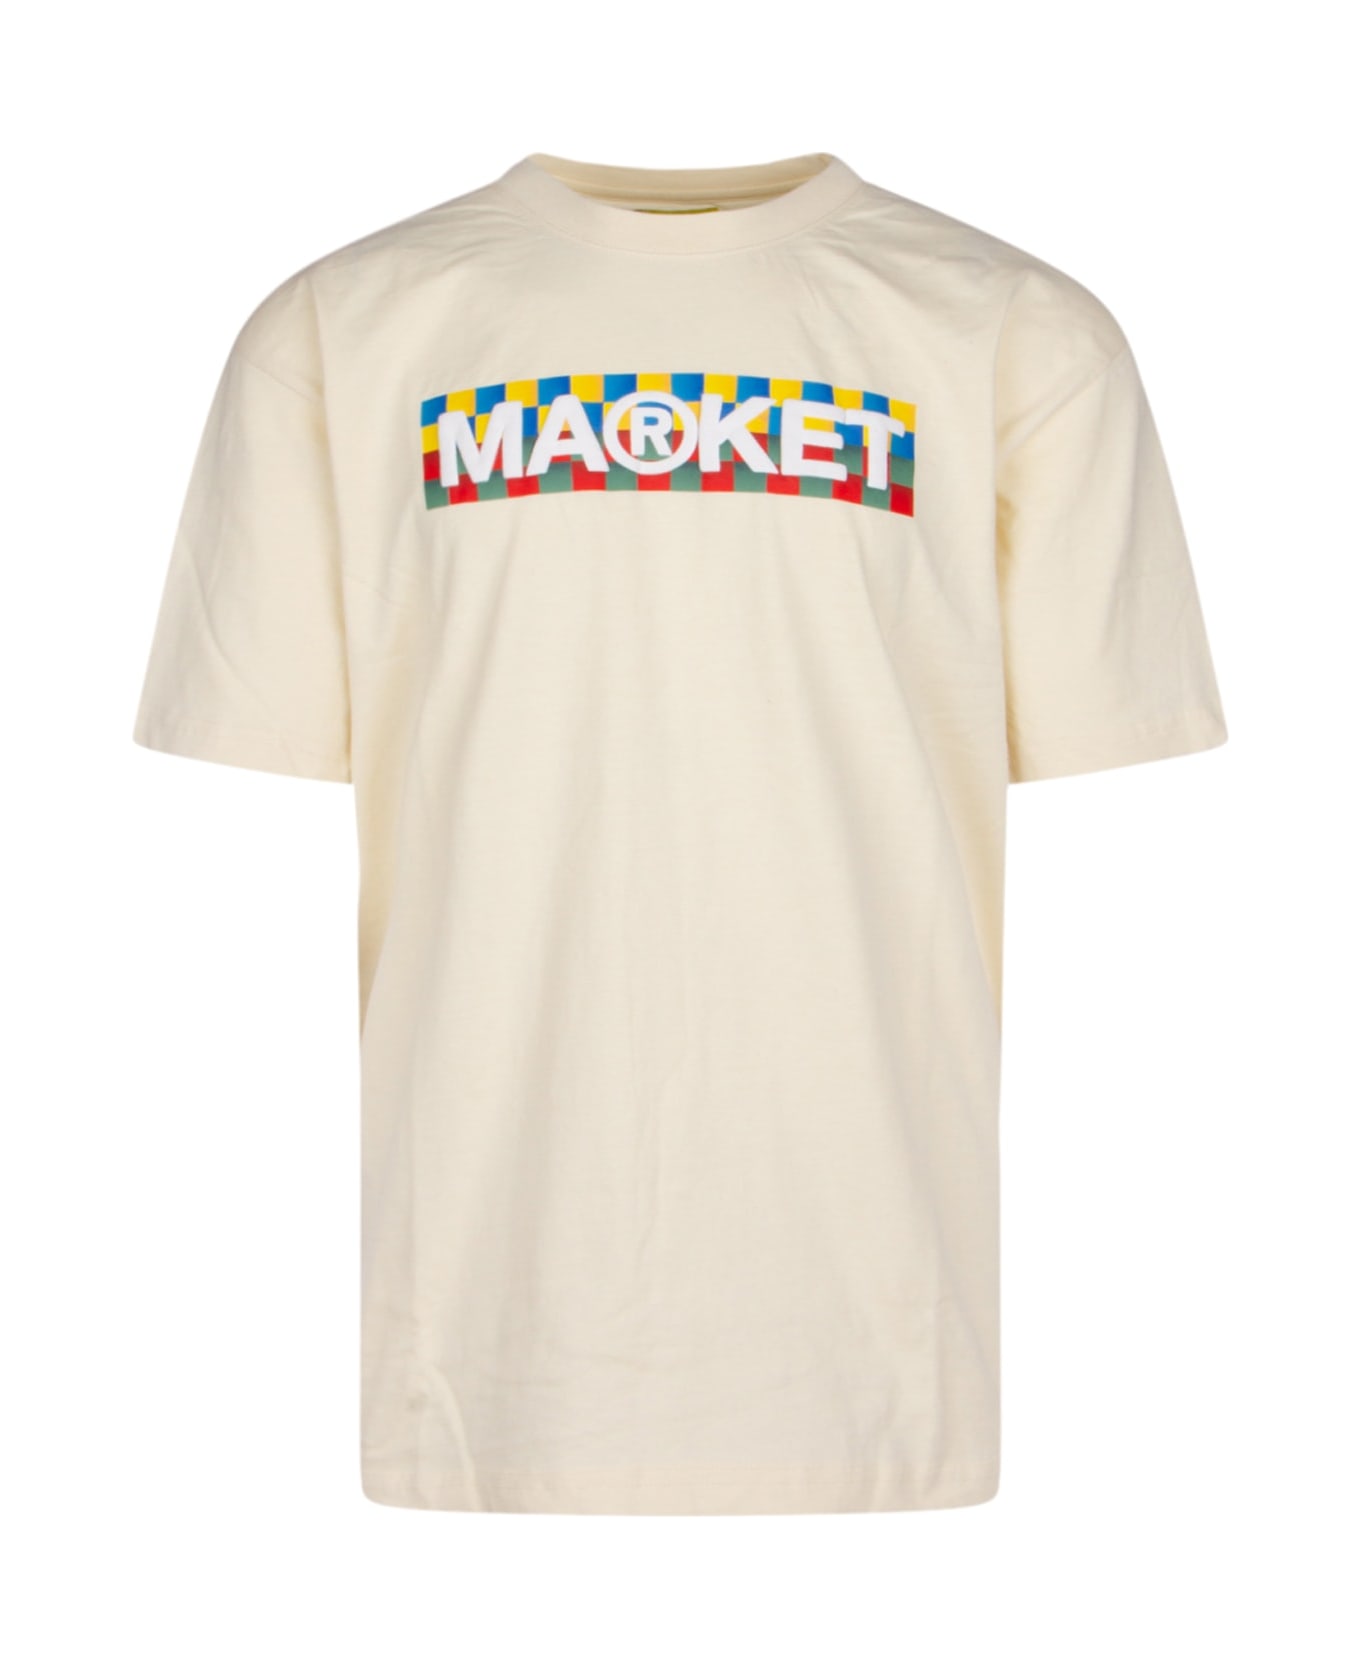 Market T-shirt - CREAM